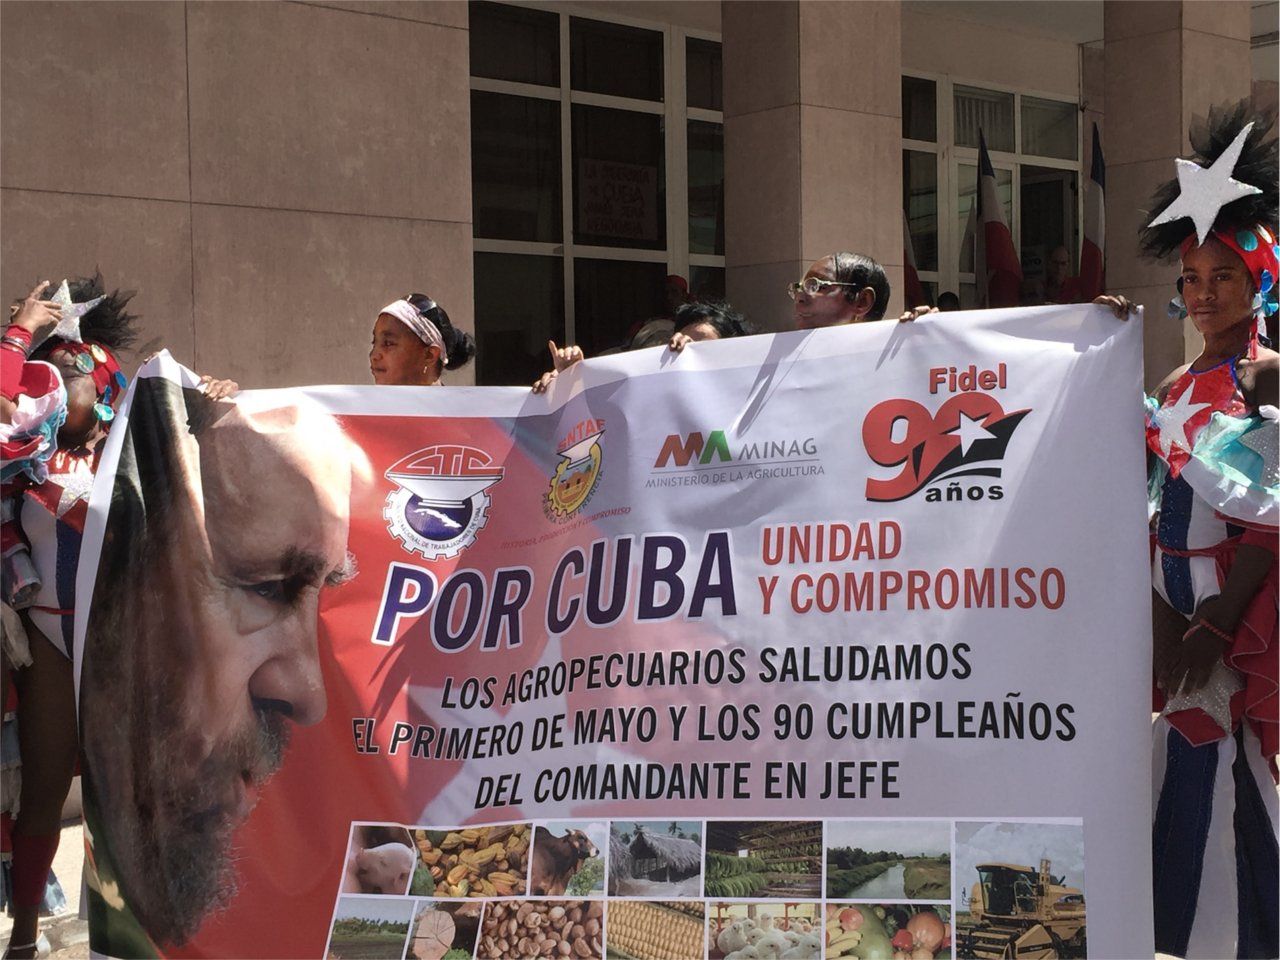 cuba solidarity tours